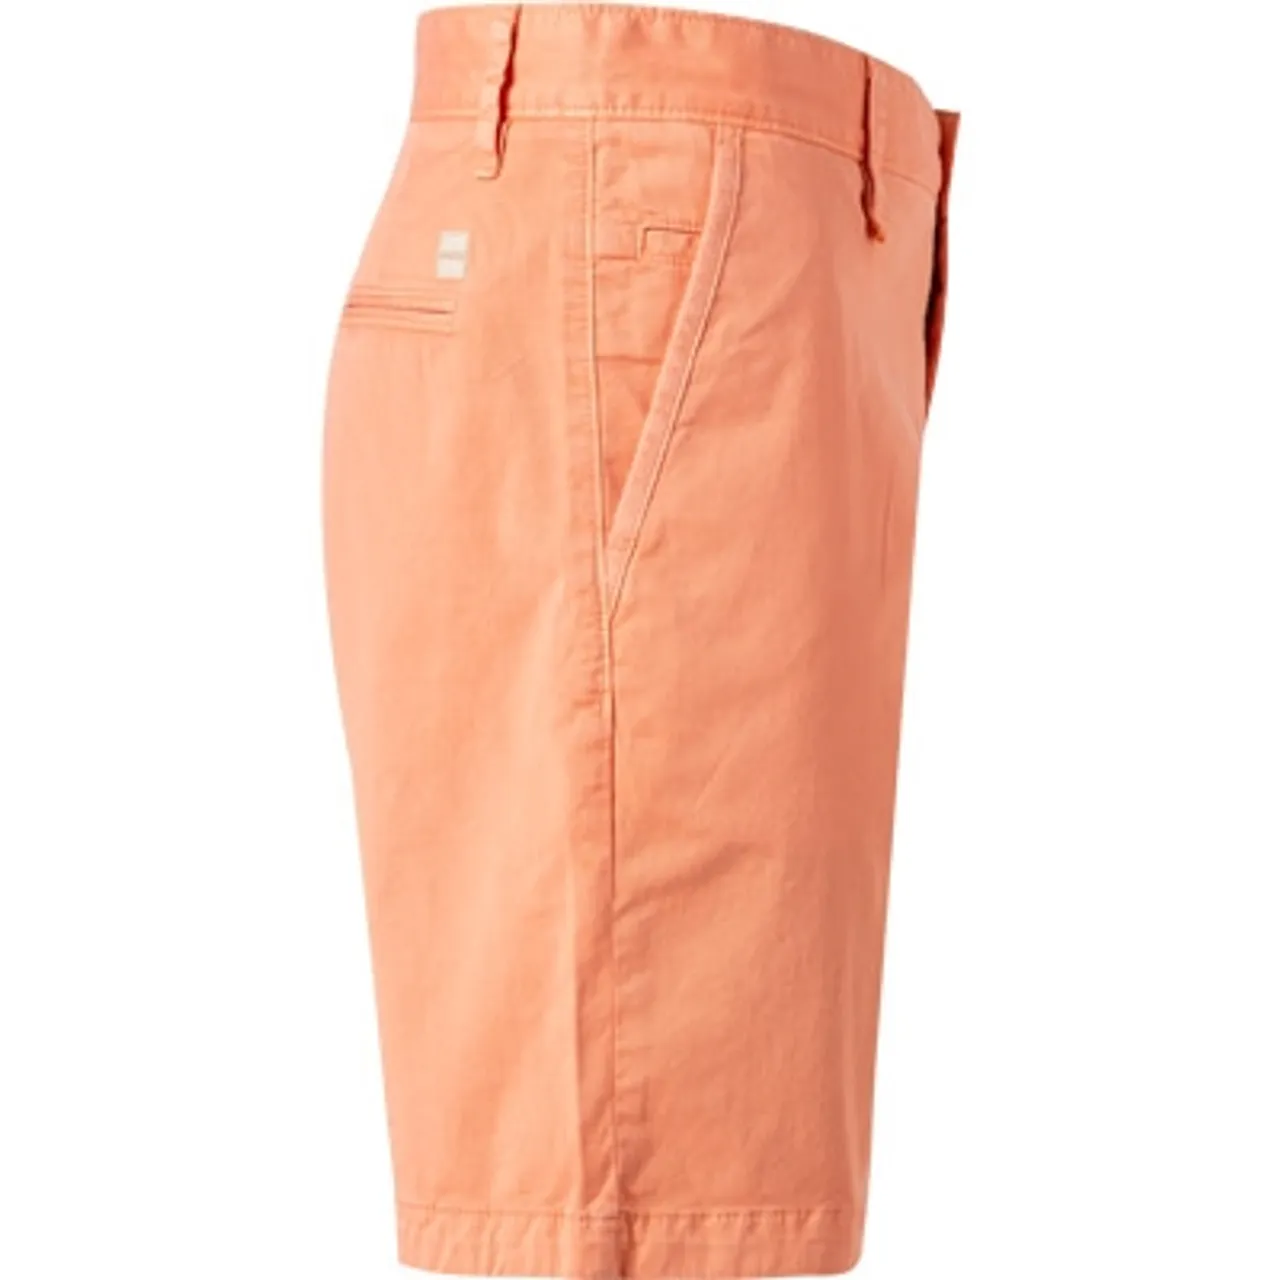 BOSS Orange Herren Shorts orange Baumwolle Slim Fit